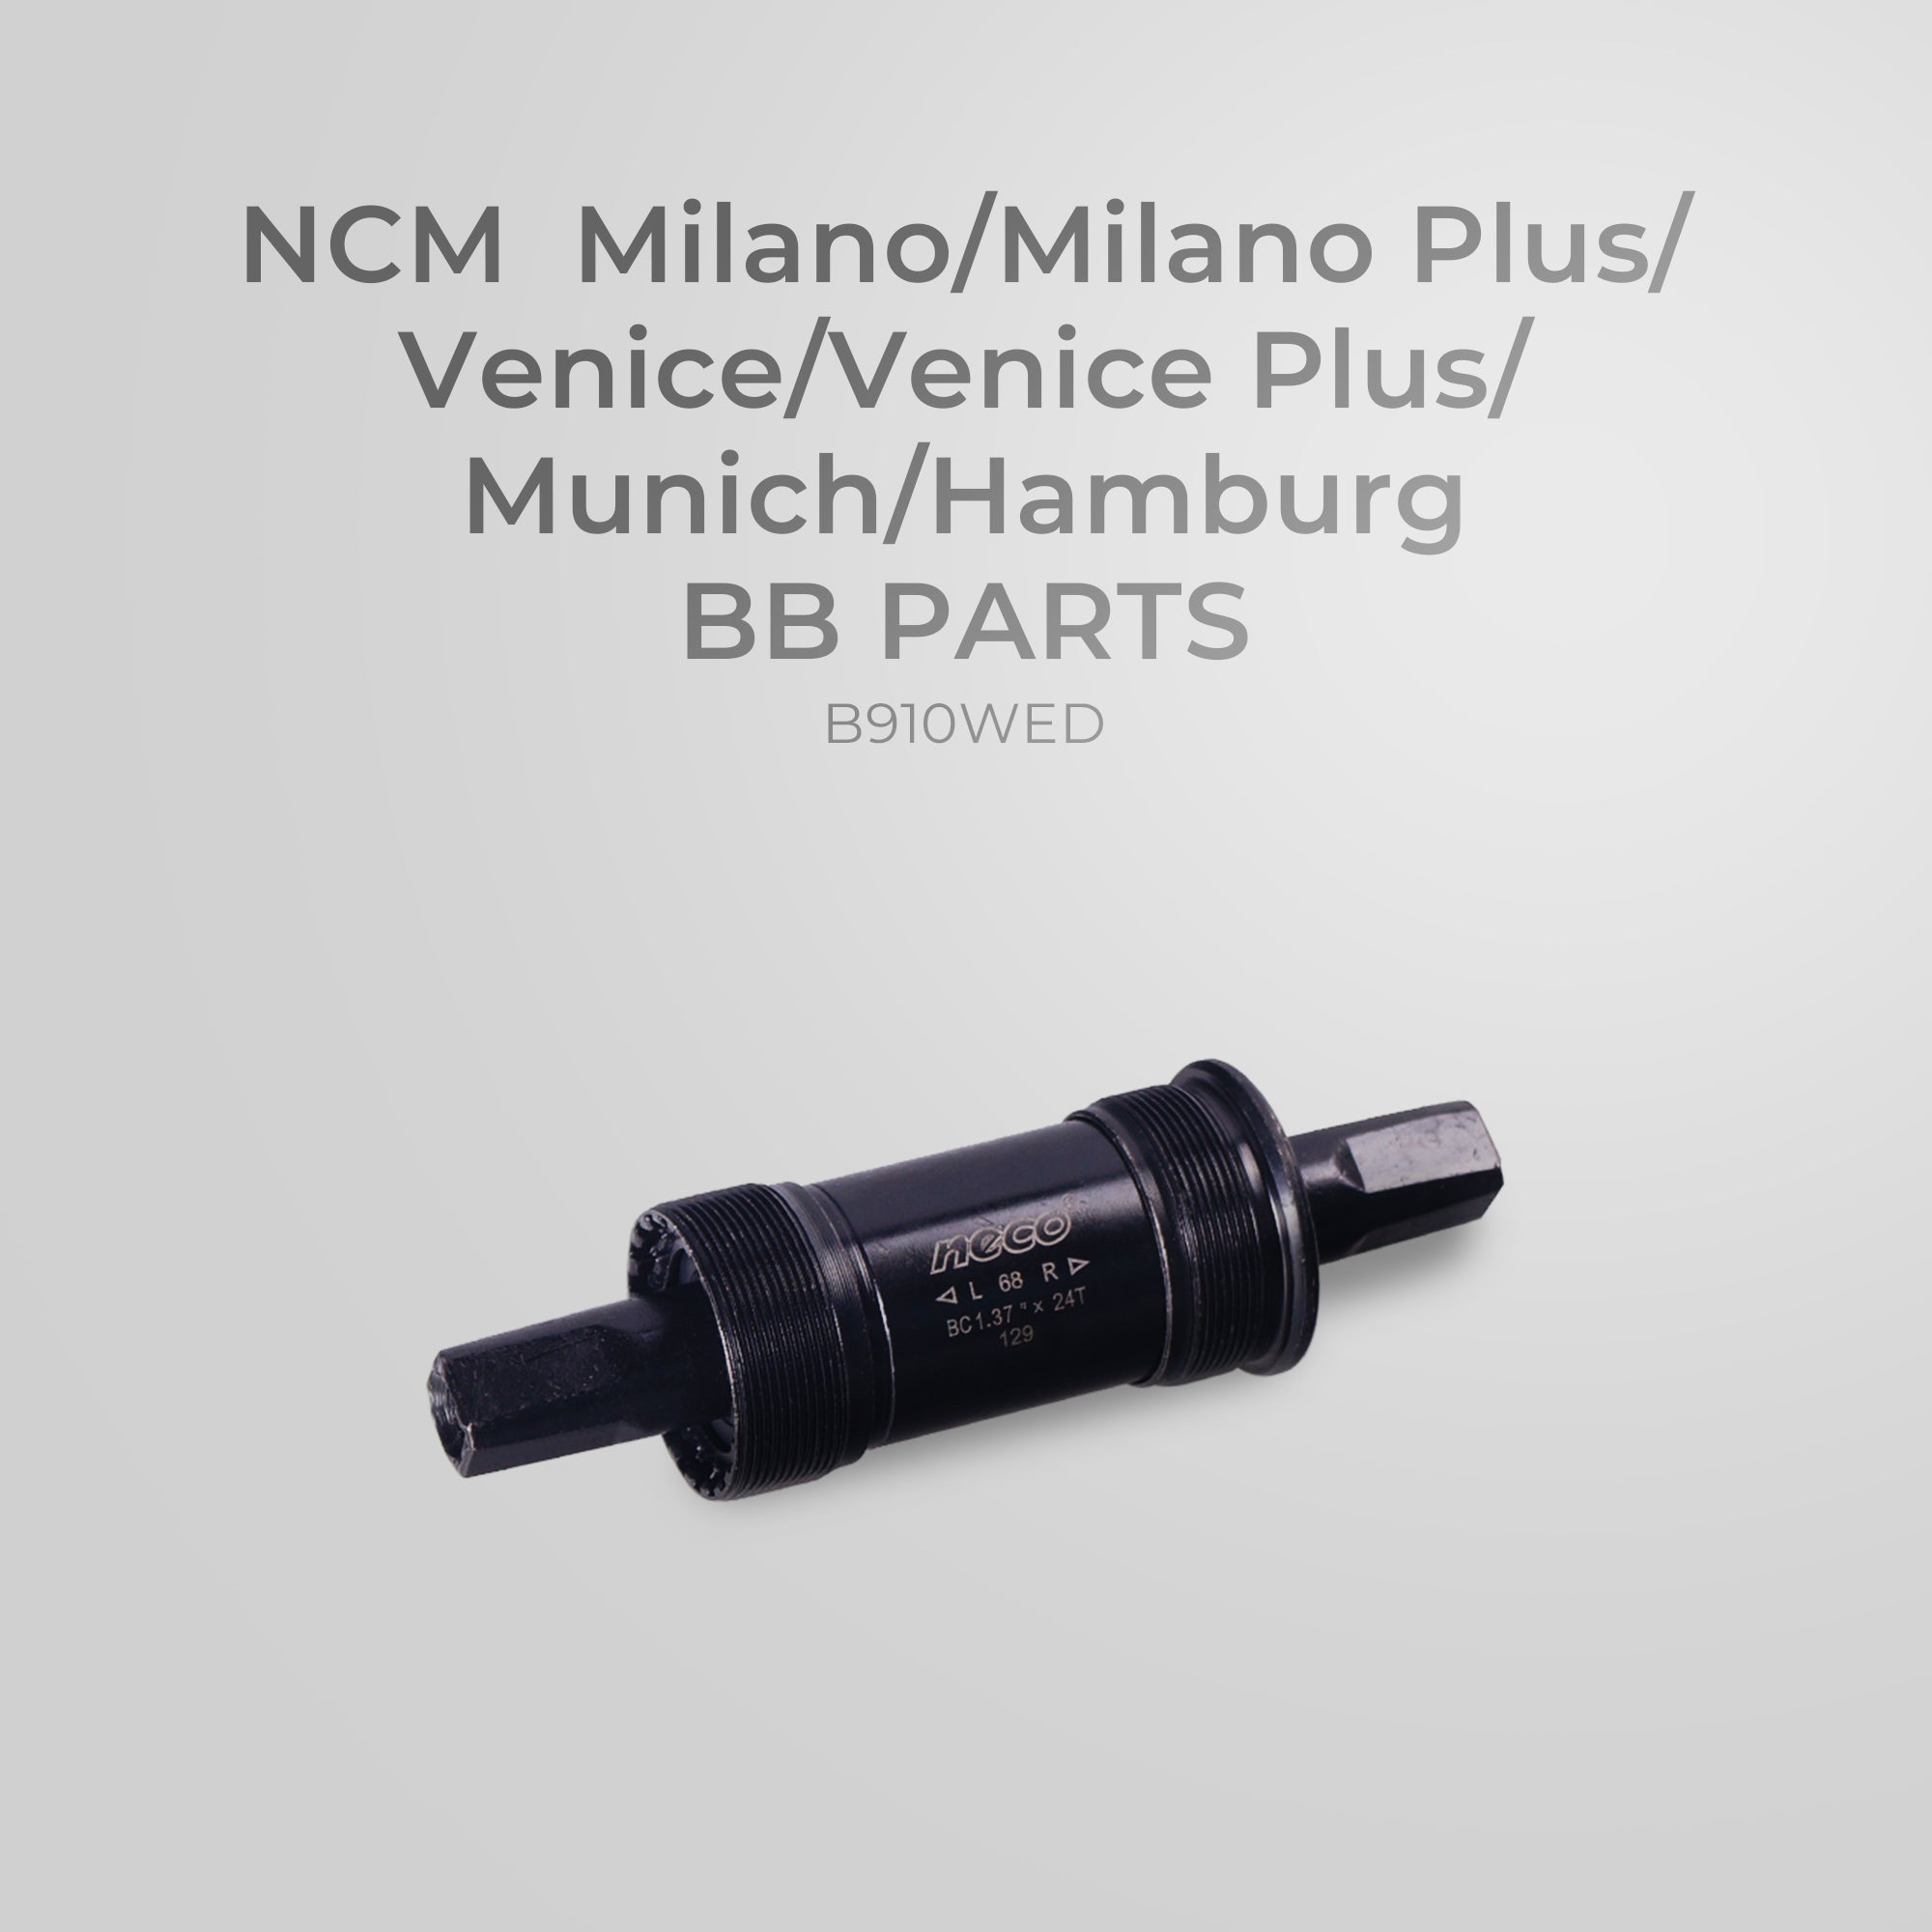 NCM Milano/Milano Plus/Venice/Venice Plus/Munich/Hamburg BB Parts - B910WED